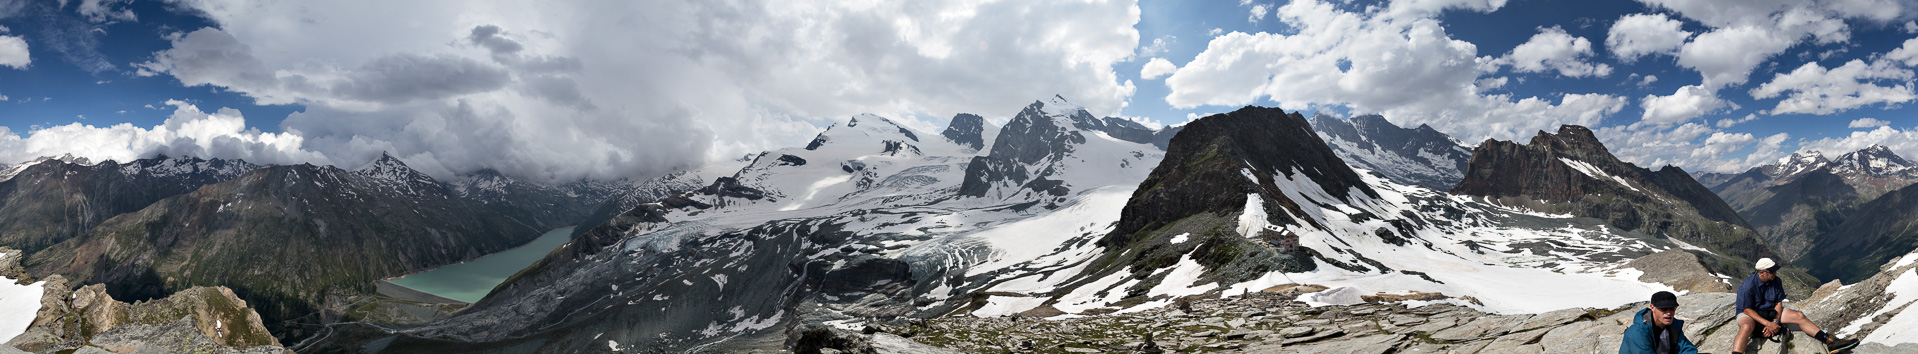 Gipfel-Panorama: Mattmarksee, Strahlhorn, Rimpfischhorn, Allalin, Hinterallalin, Mischabel, Egginer, Weissmies.